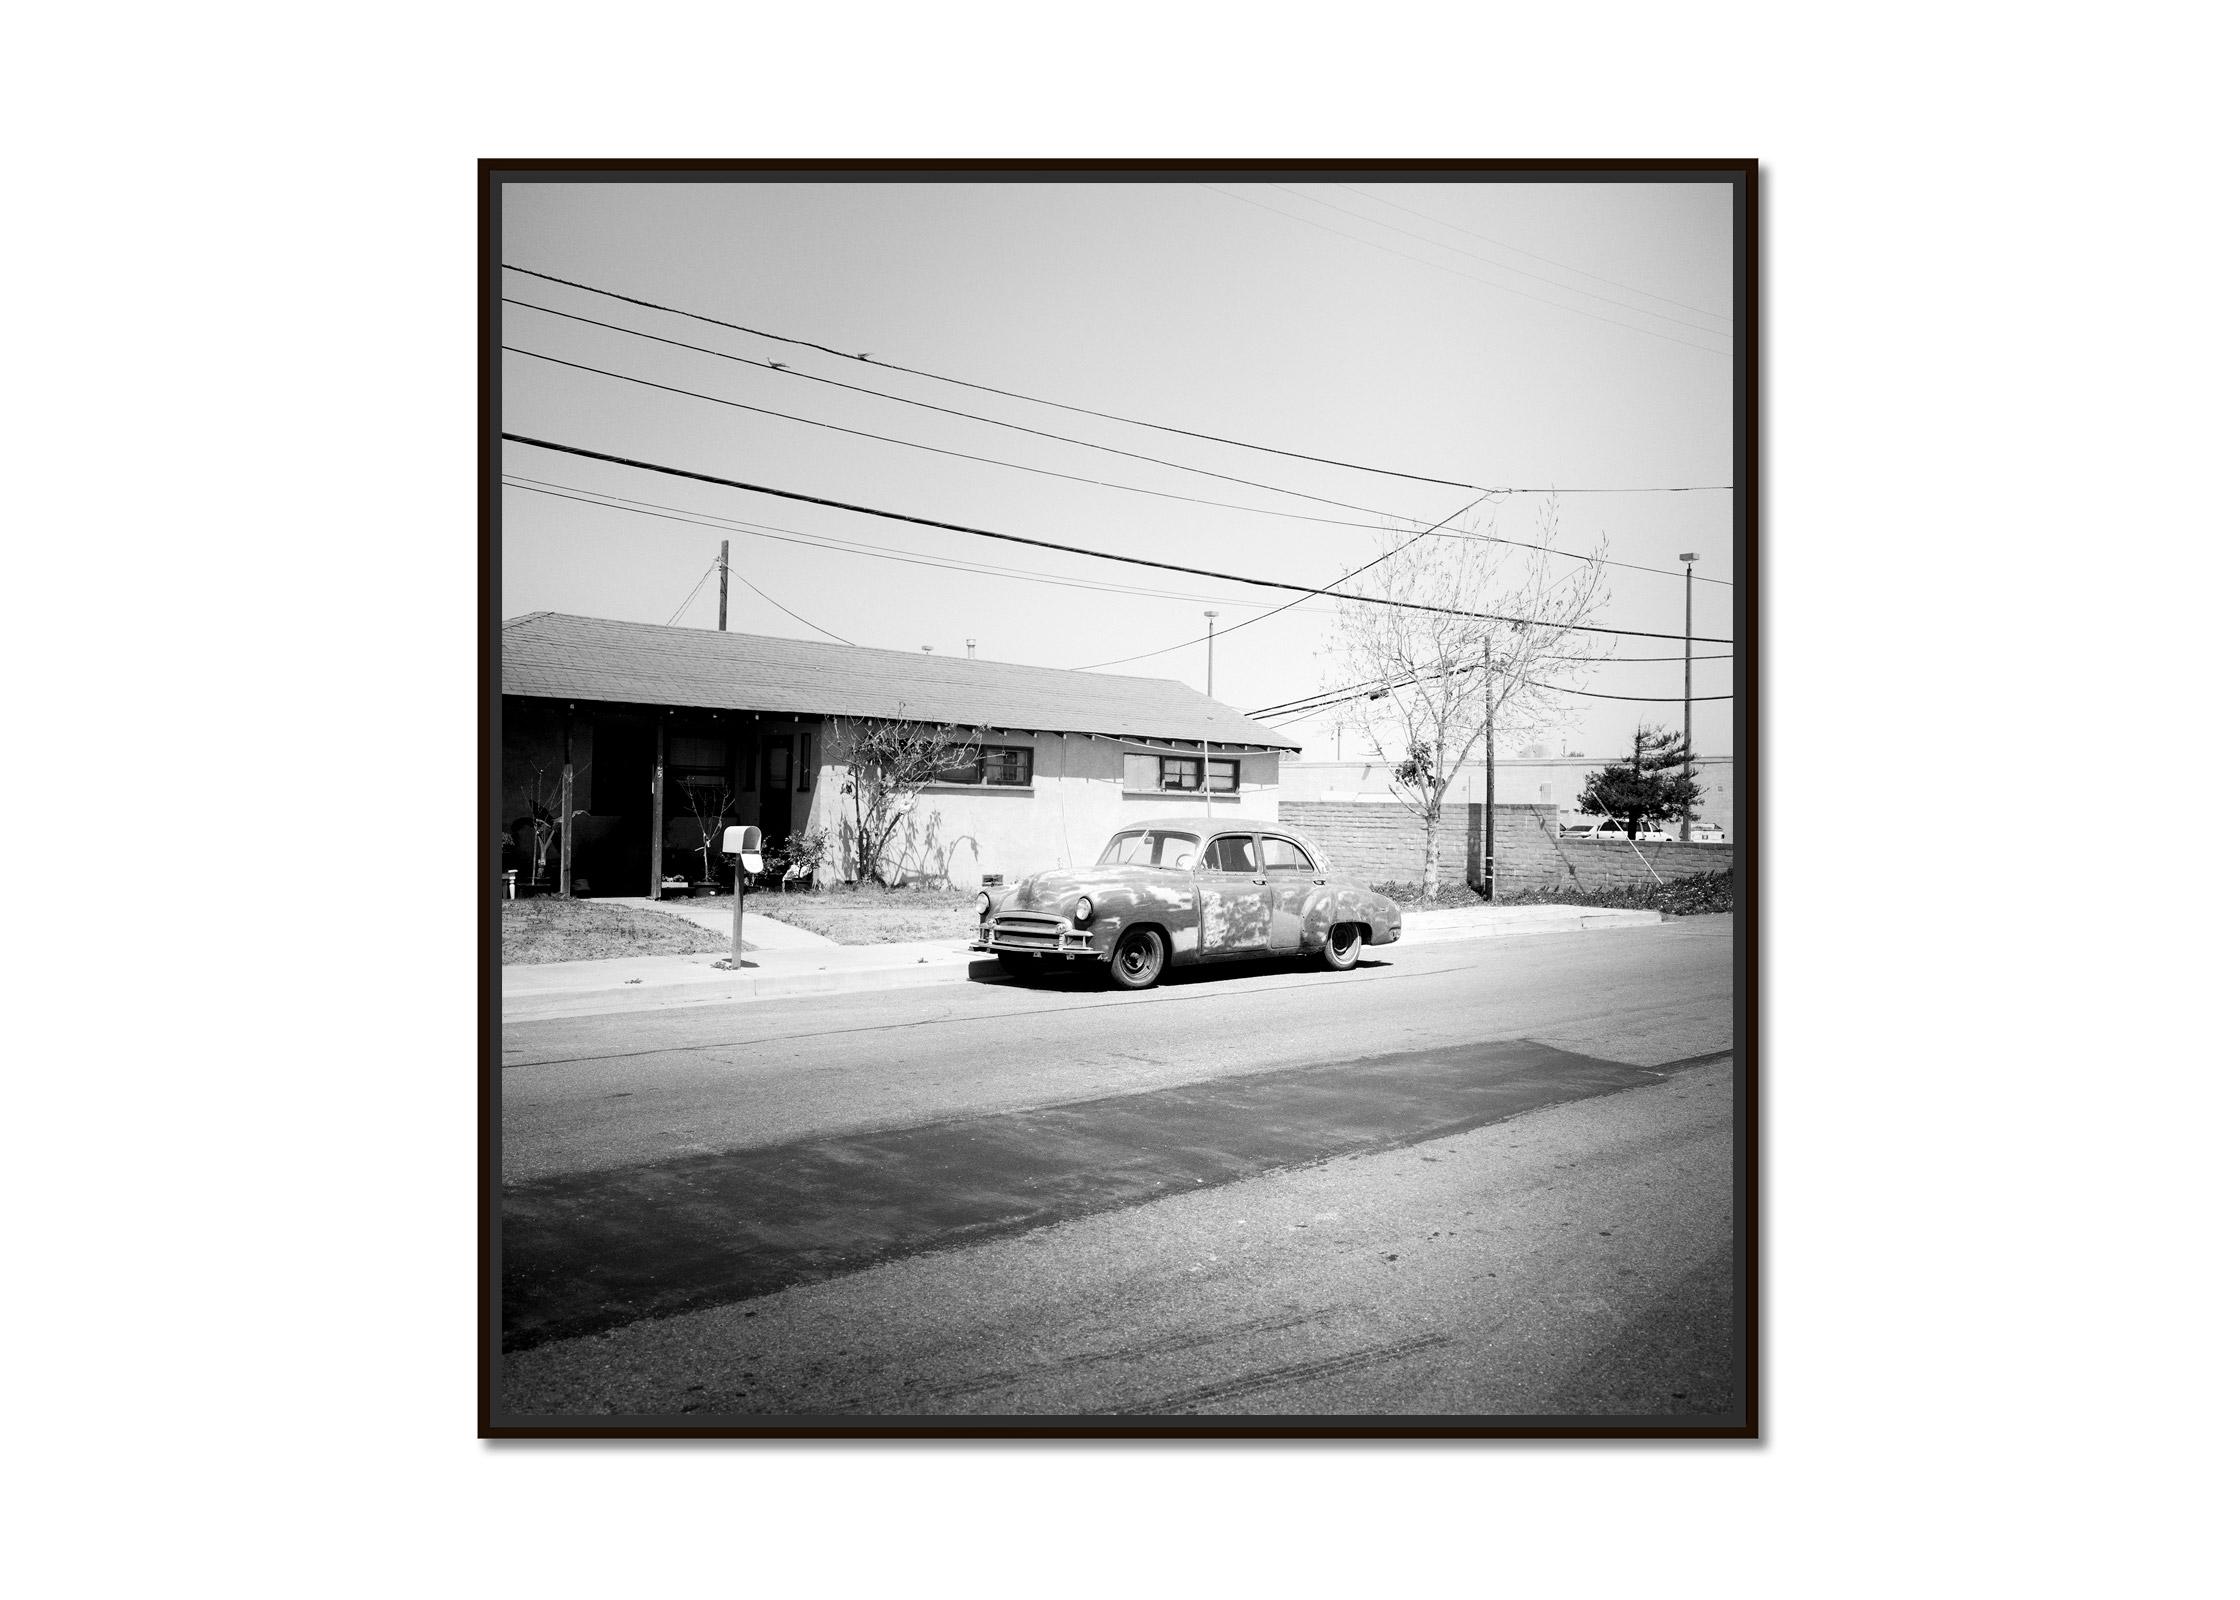 House, Classic Car, Arizona, USA, Black & White landscape photography art print - Photograph by Gerald Berghammer